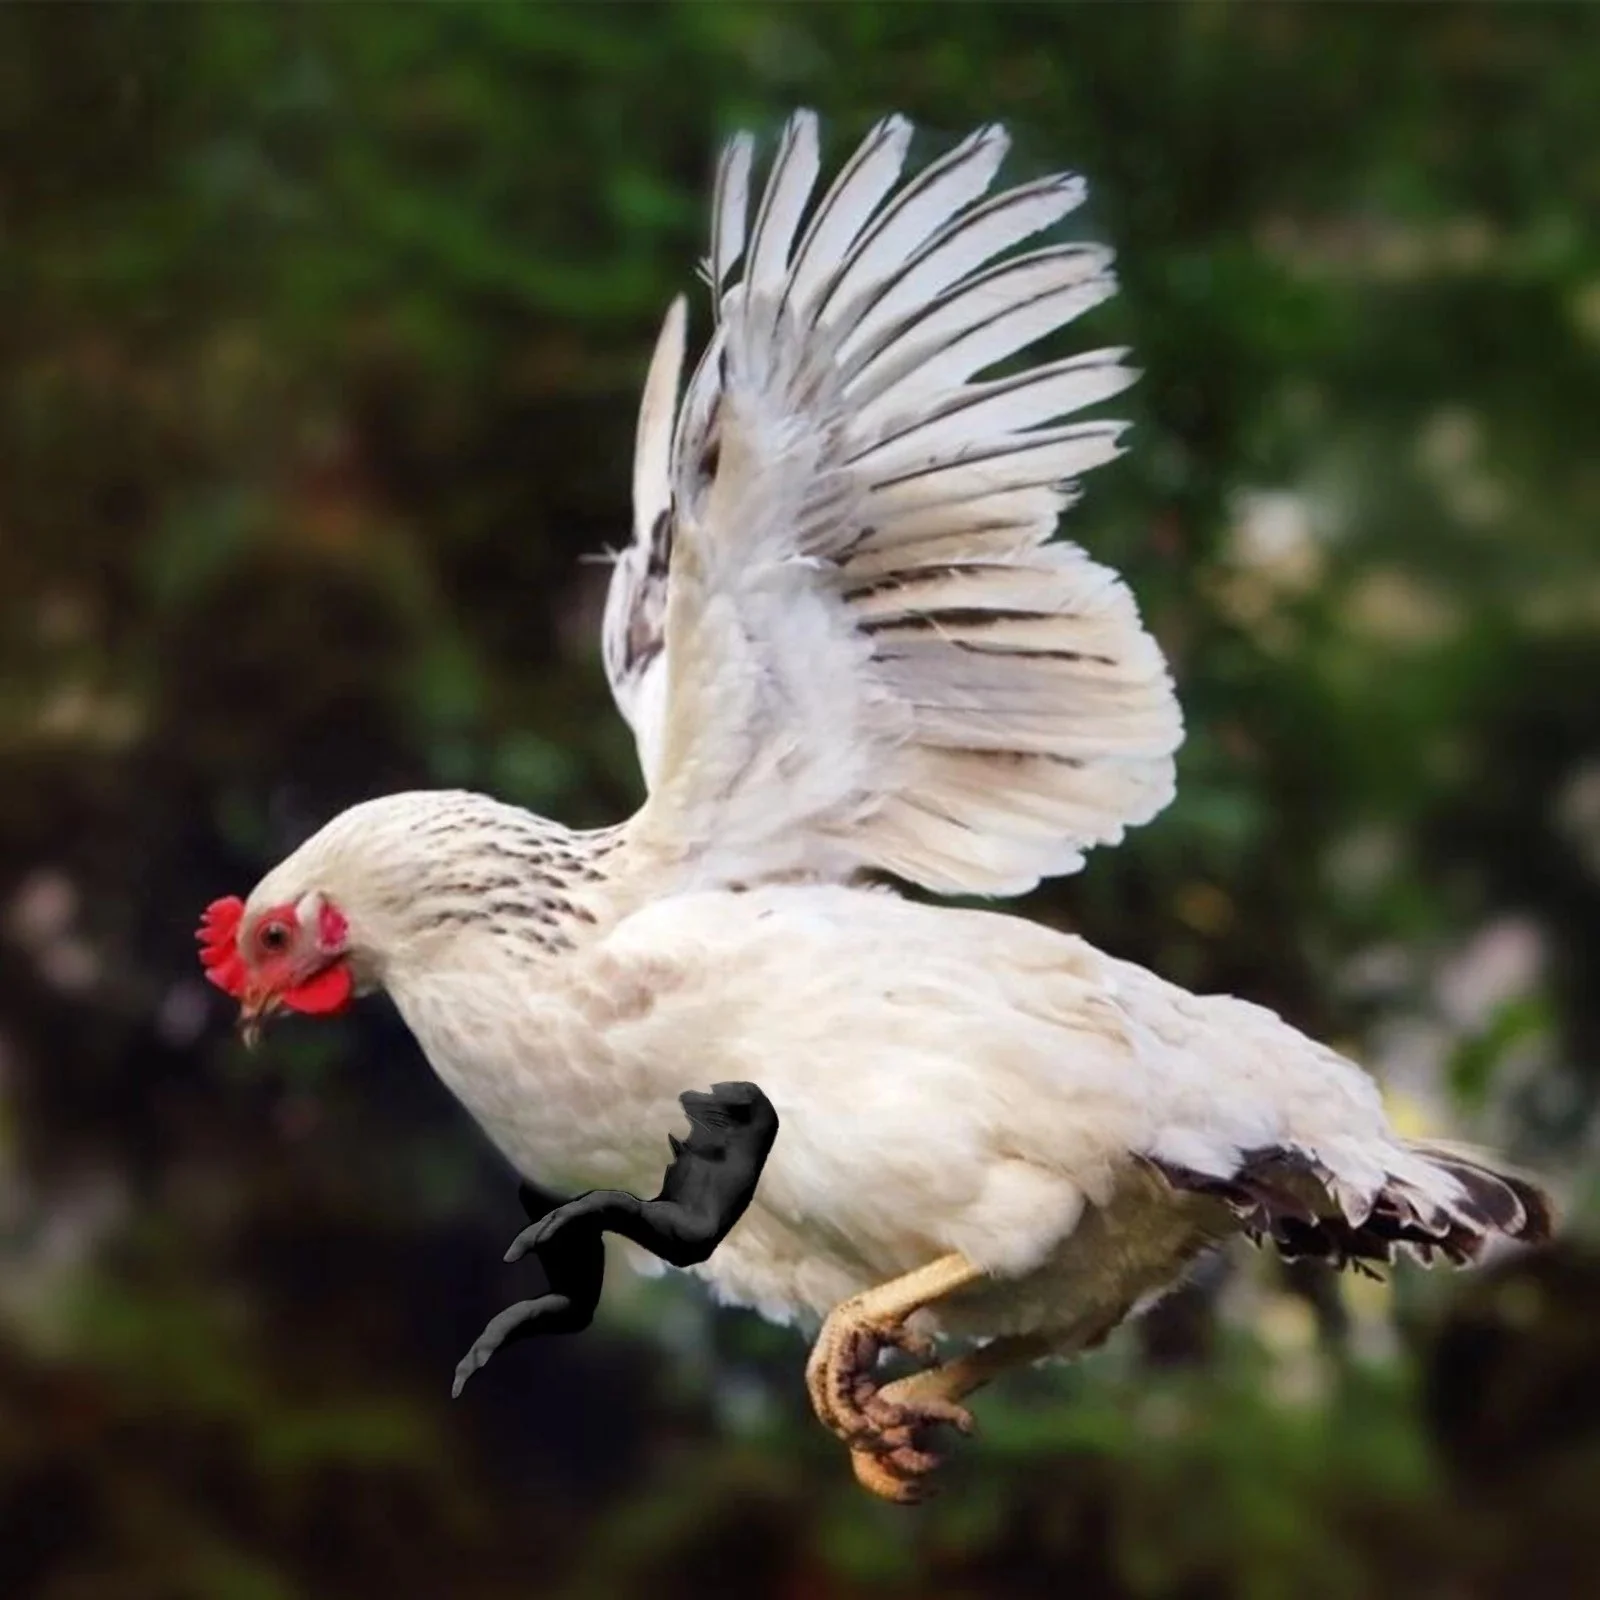 Chicken fly. Петух летает. Полет курицы. Курица летит. Курица с расправленными крыльями.